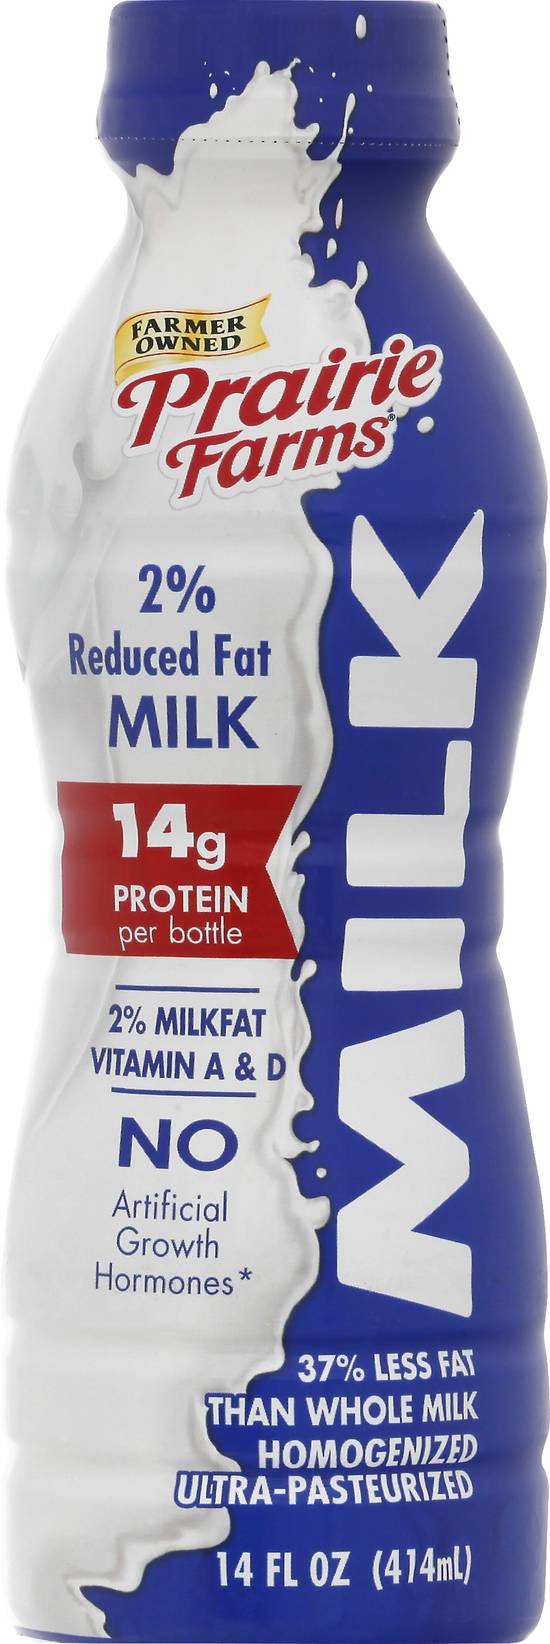 Prairie Farms 2% Reduced Fat Milk (14 fl oz)